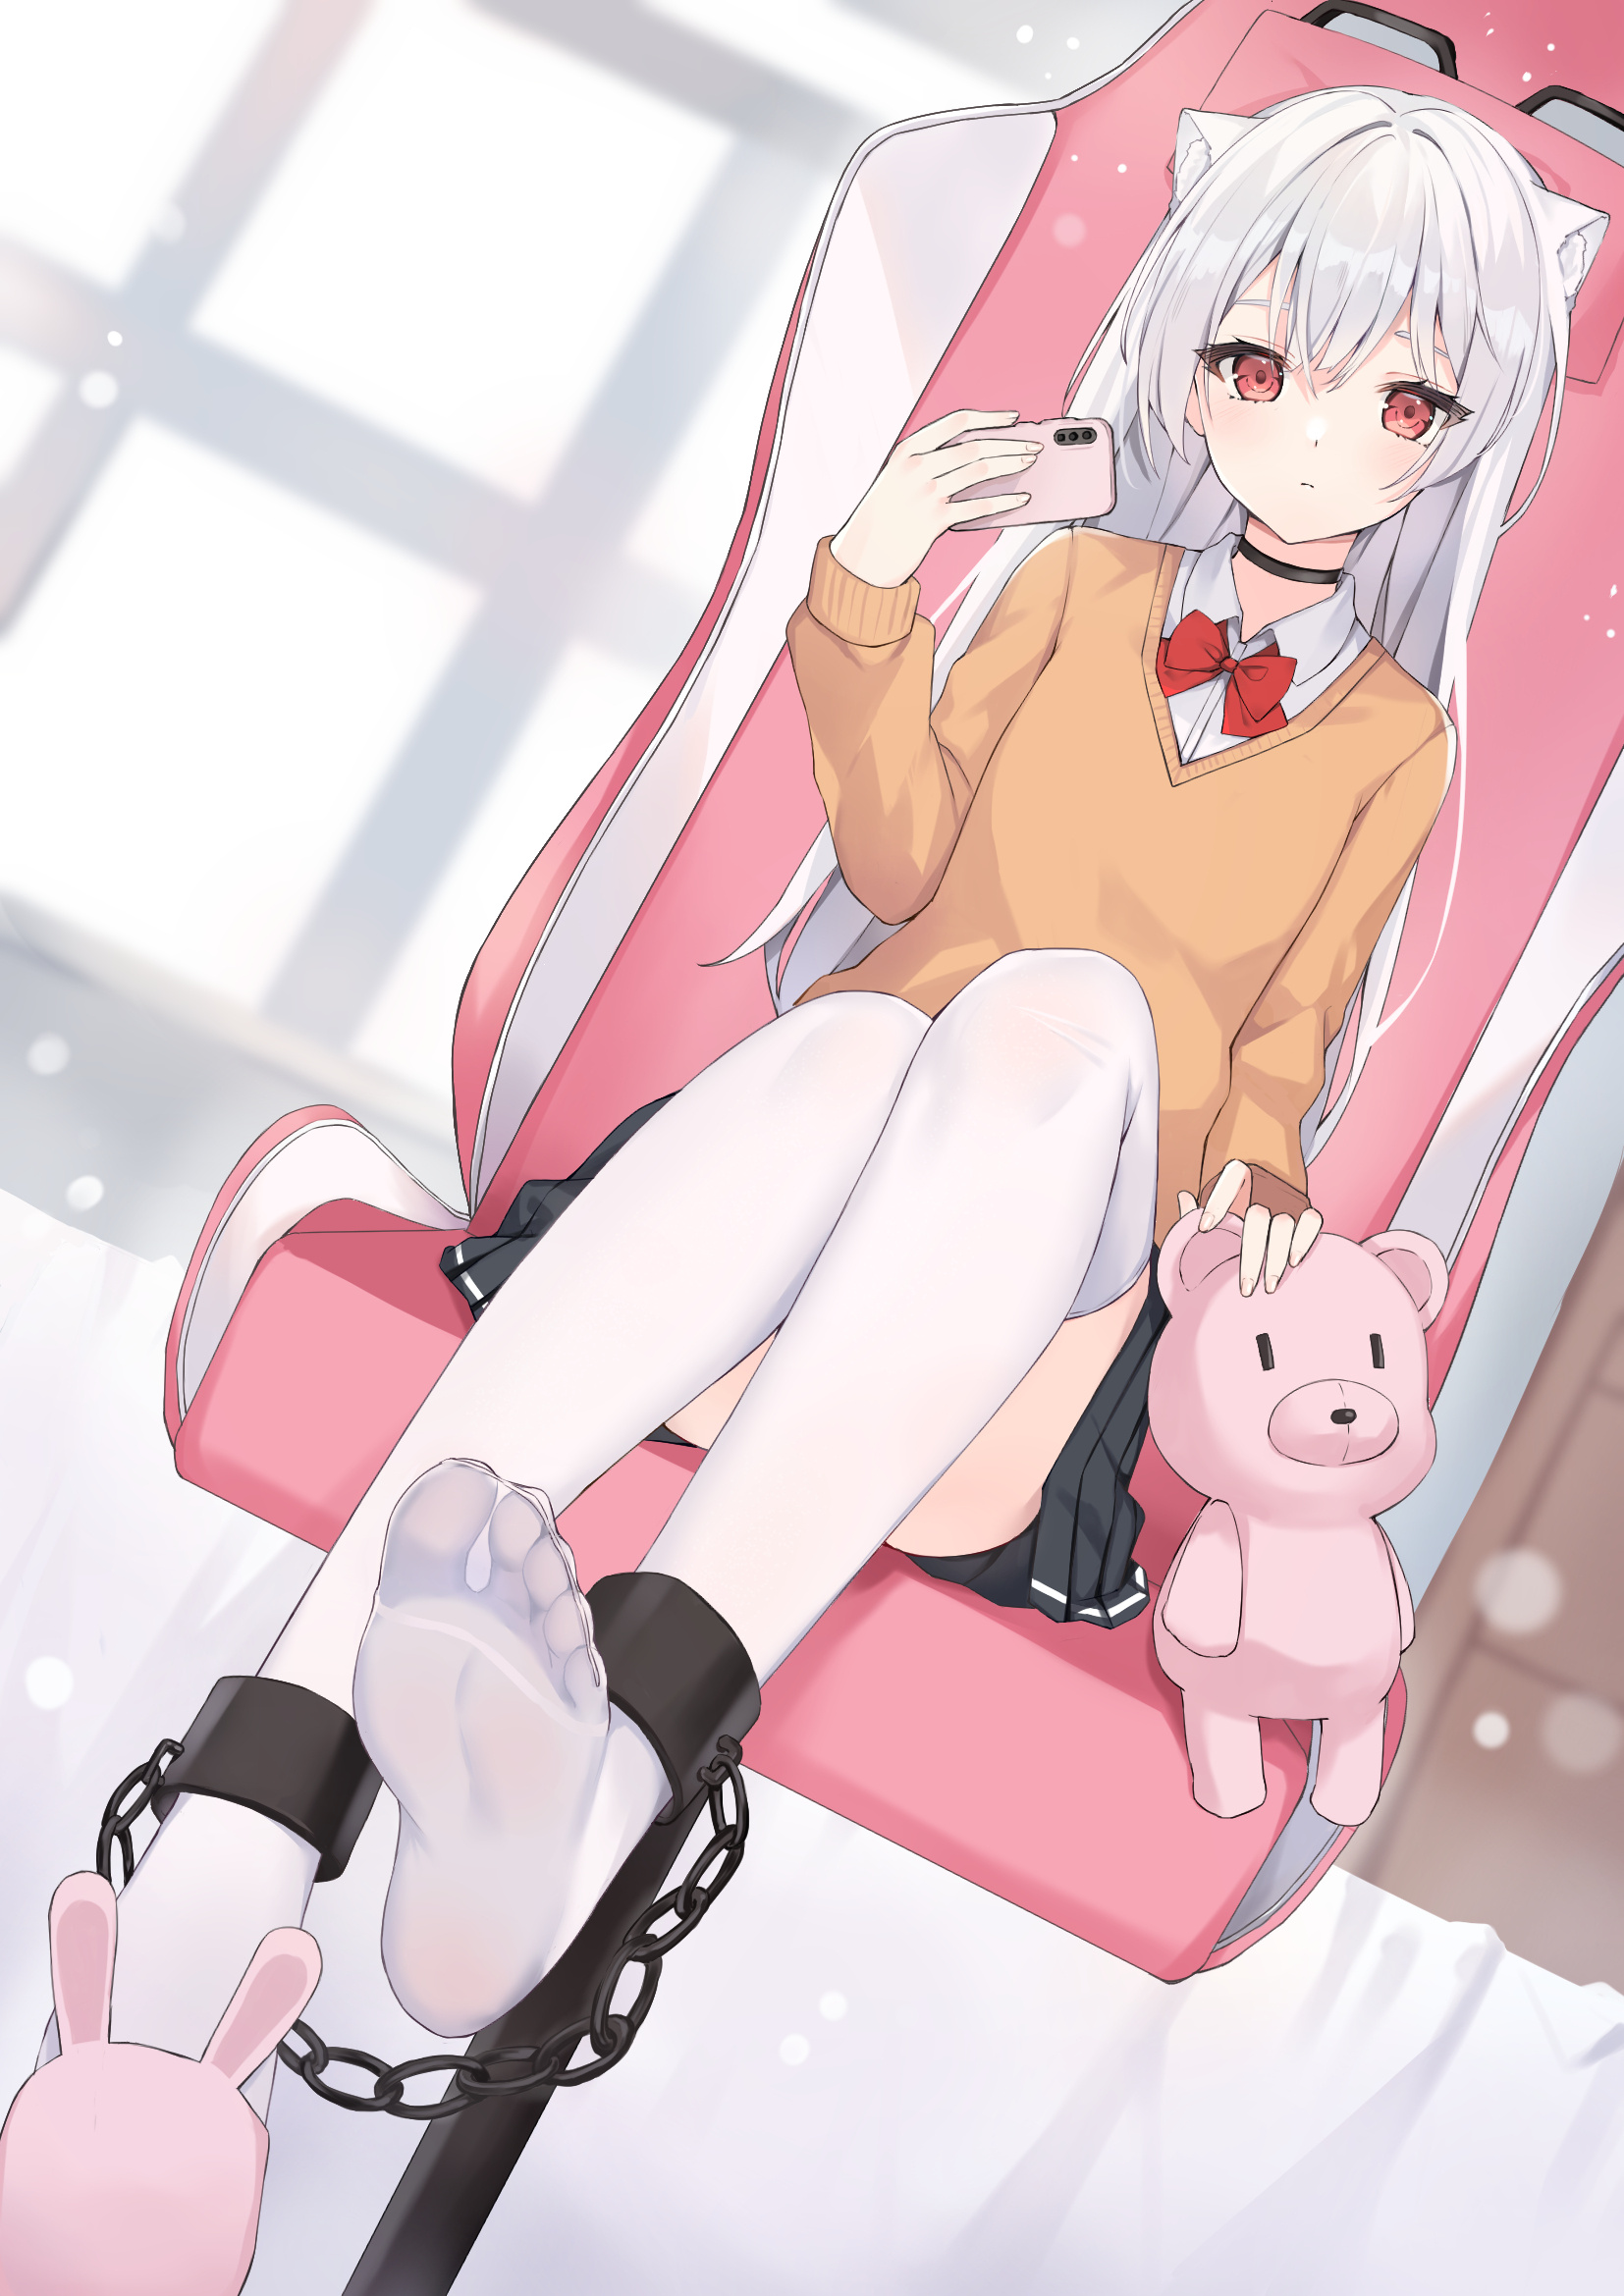 Anime 1654x2339 anime feet skirt white stockings anime girls white hair cuffs ankle cuffs stockings cat girl cat ears teddy bears